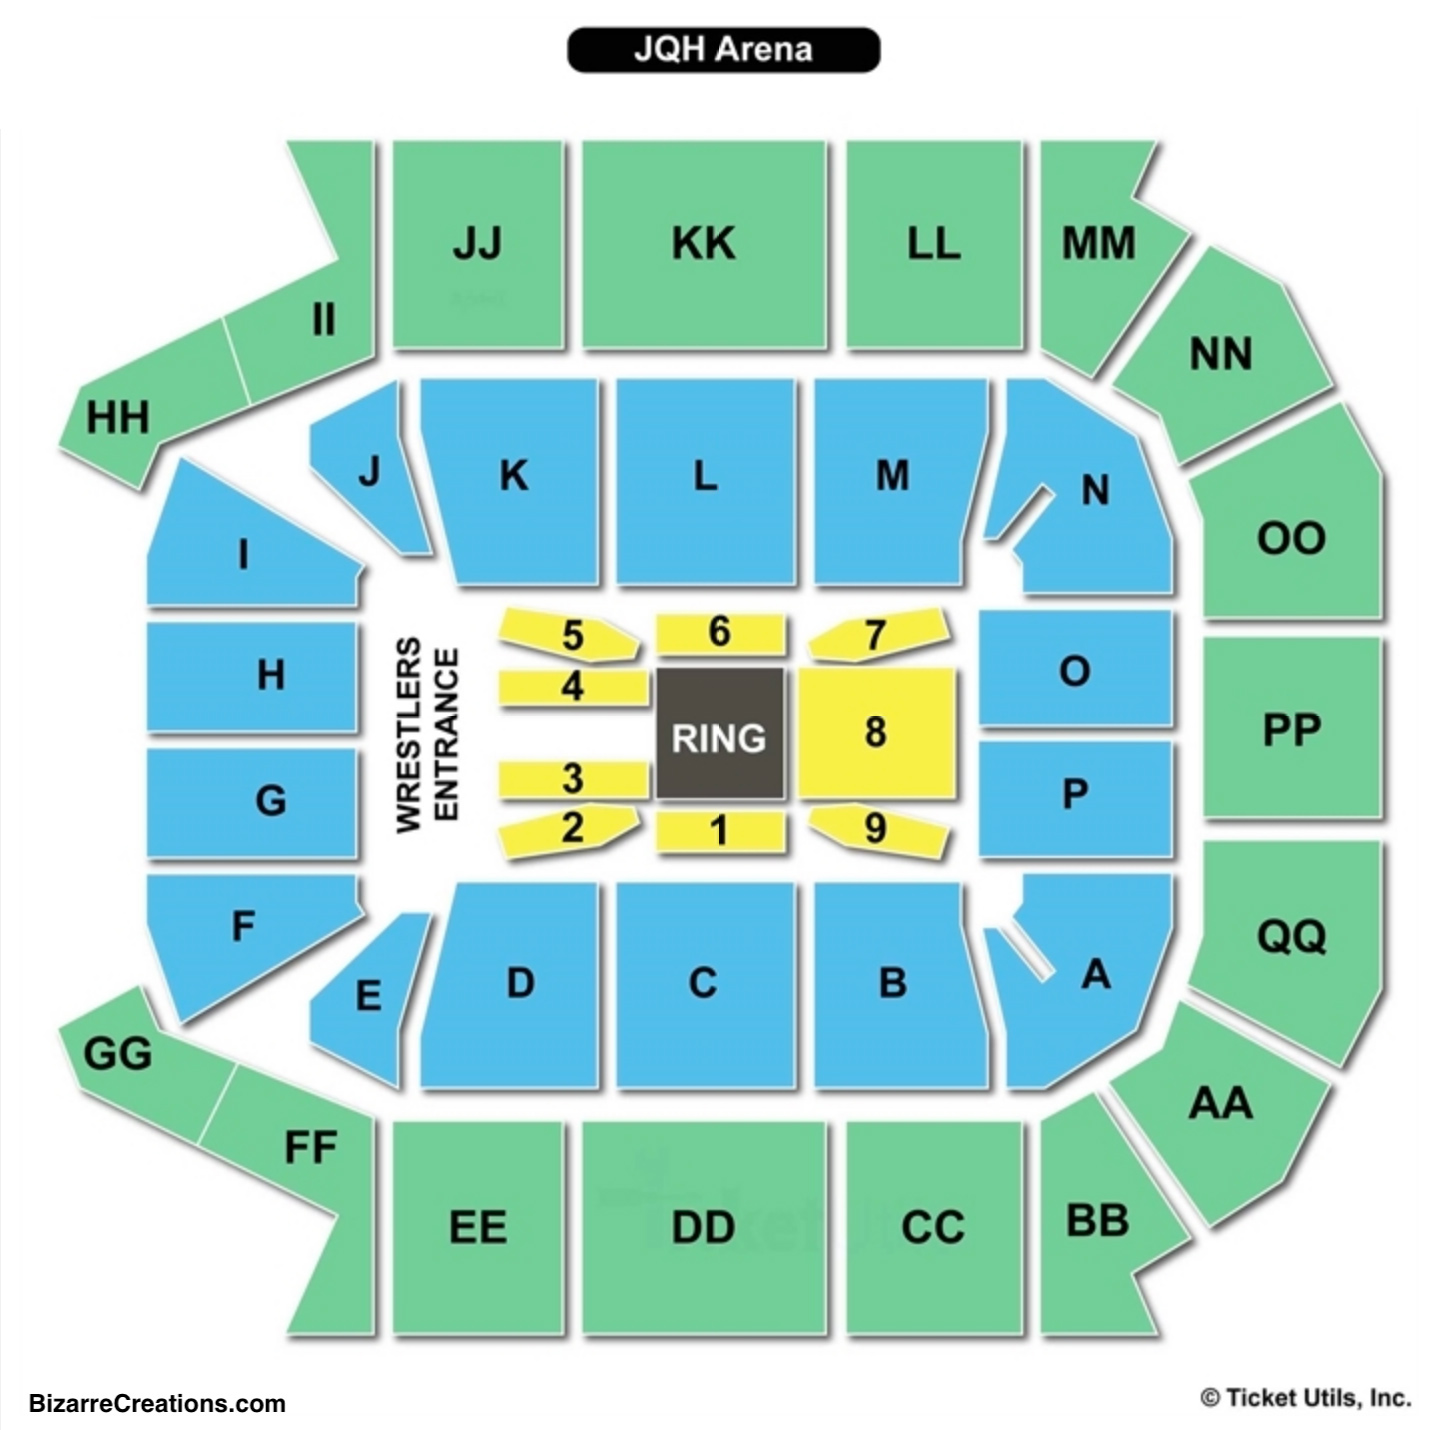 JQH Arena Seating Chart WWE.